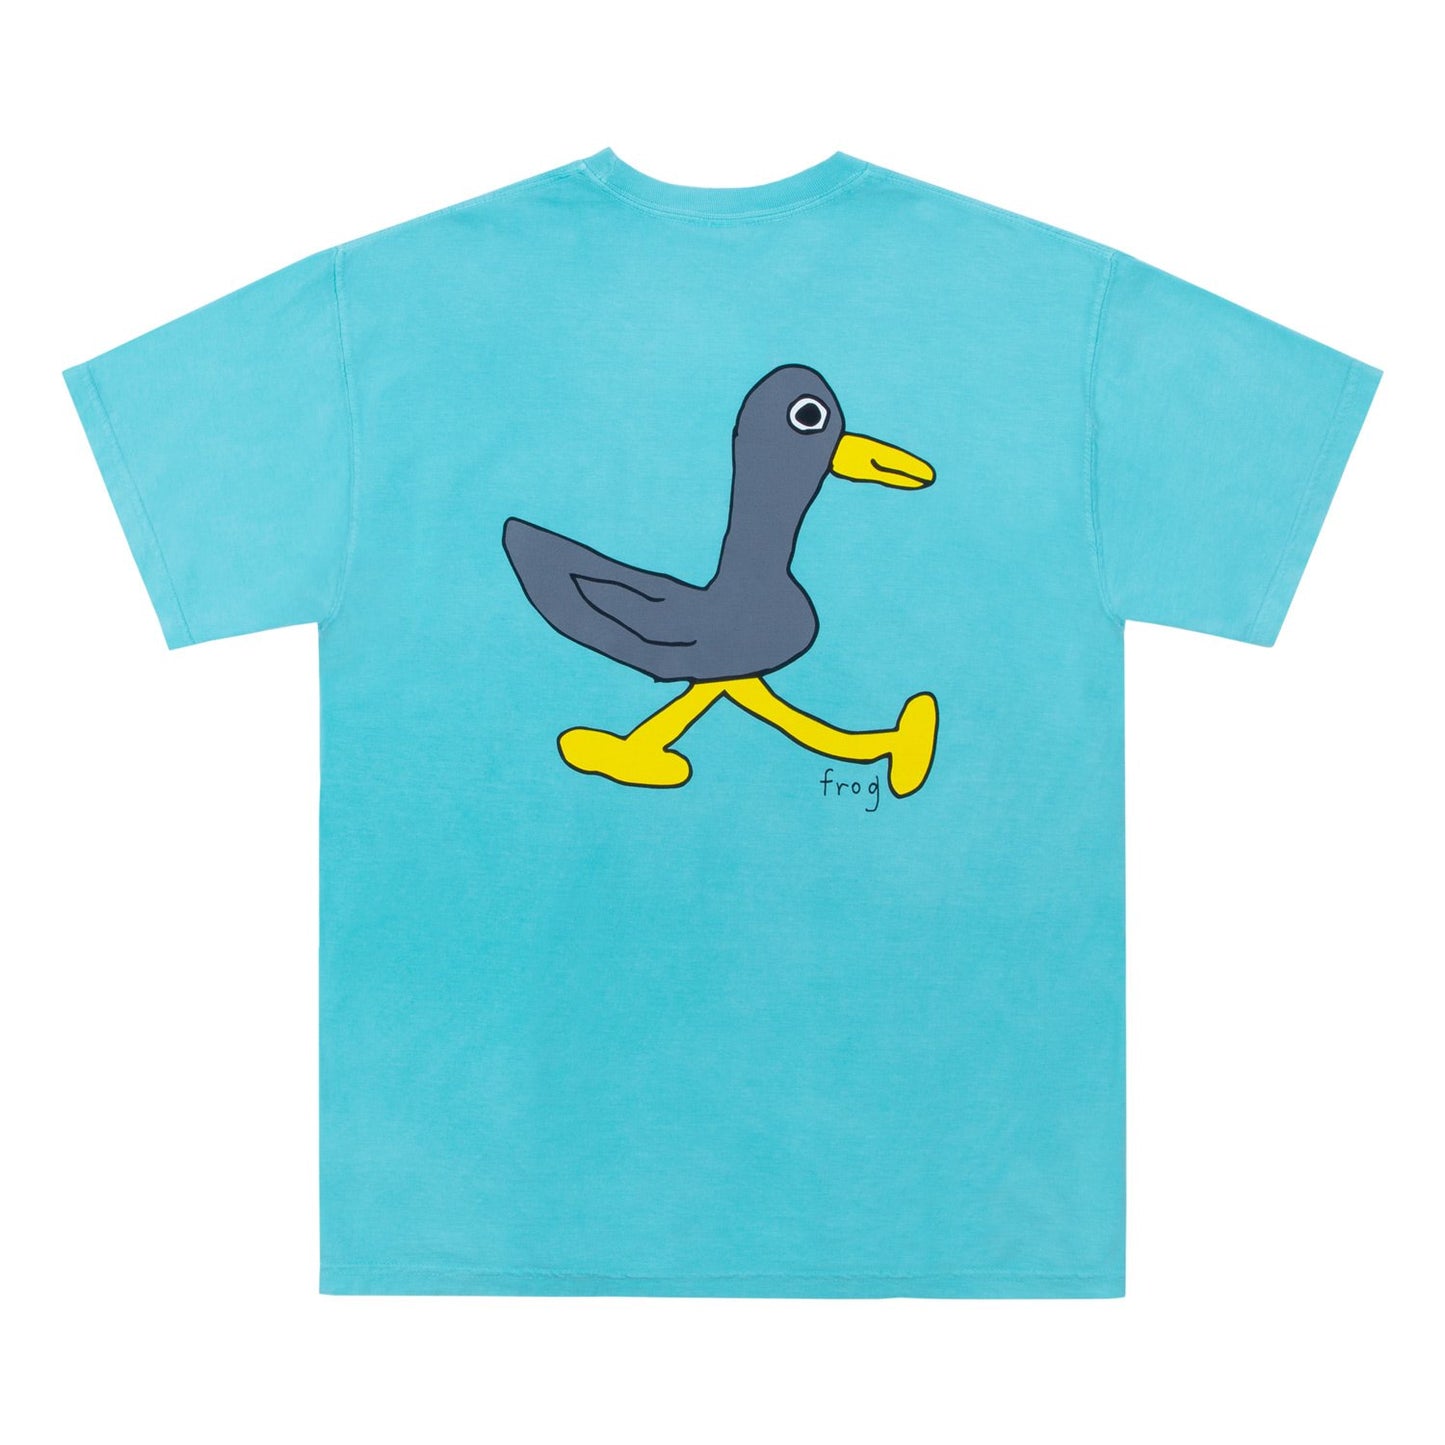 Noah x Frog Skateboards - Animal Logo Pocket T-Shirt (Mint)